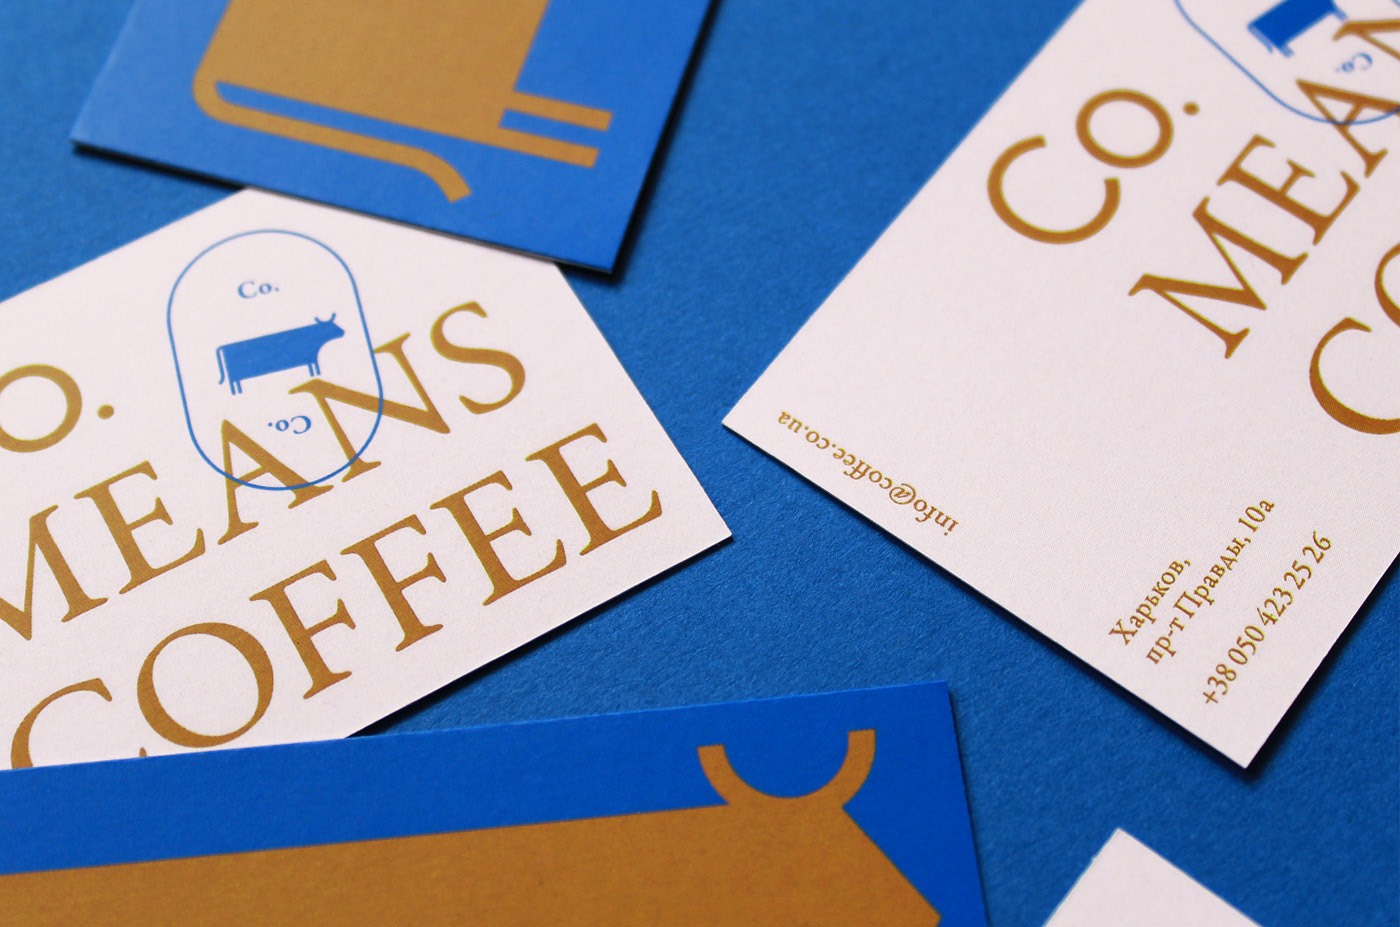 Co. Means Coffee咖啡馆品牌设计